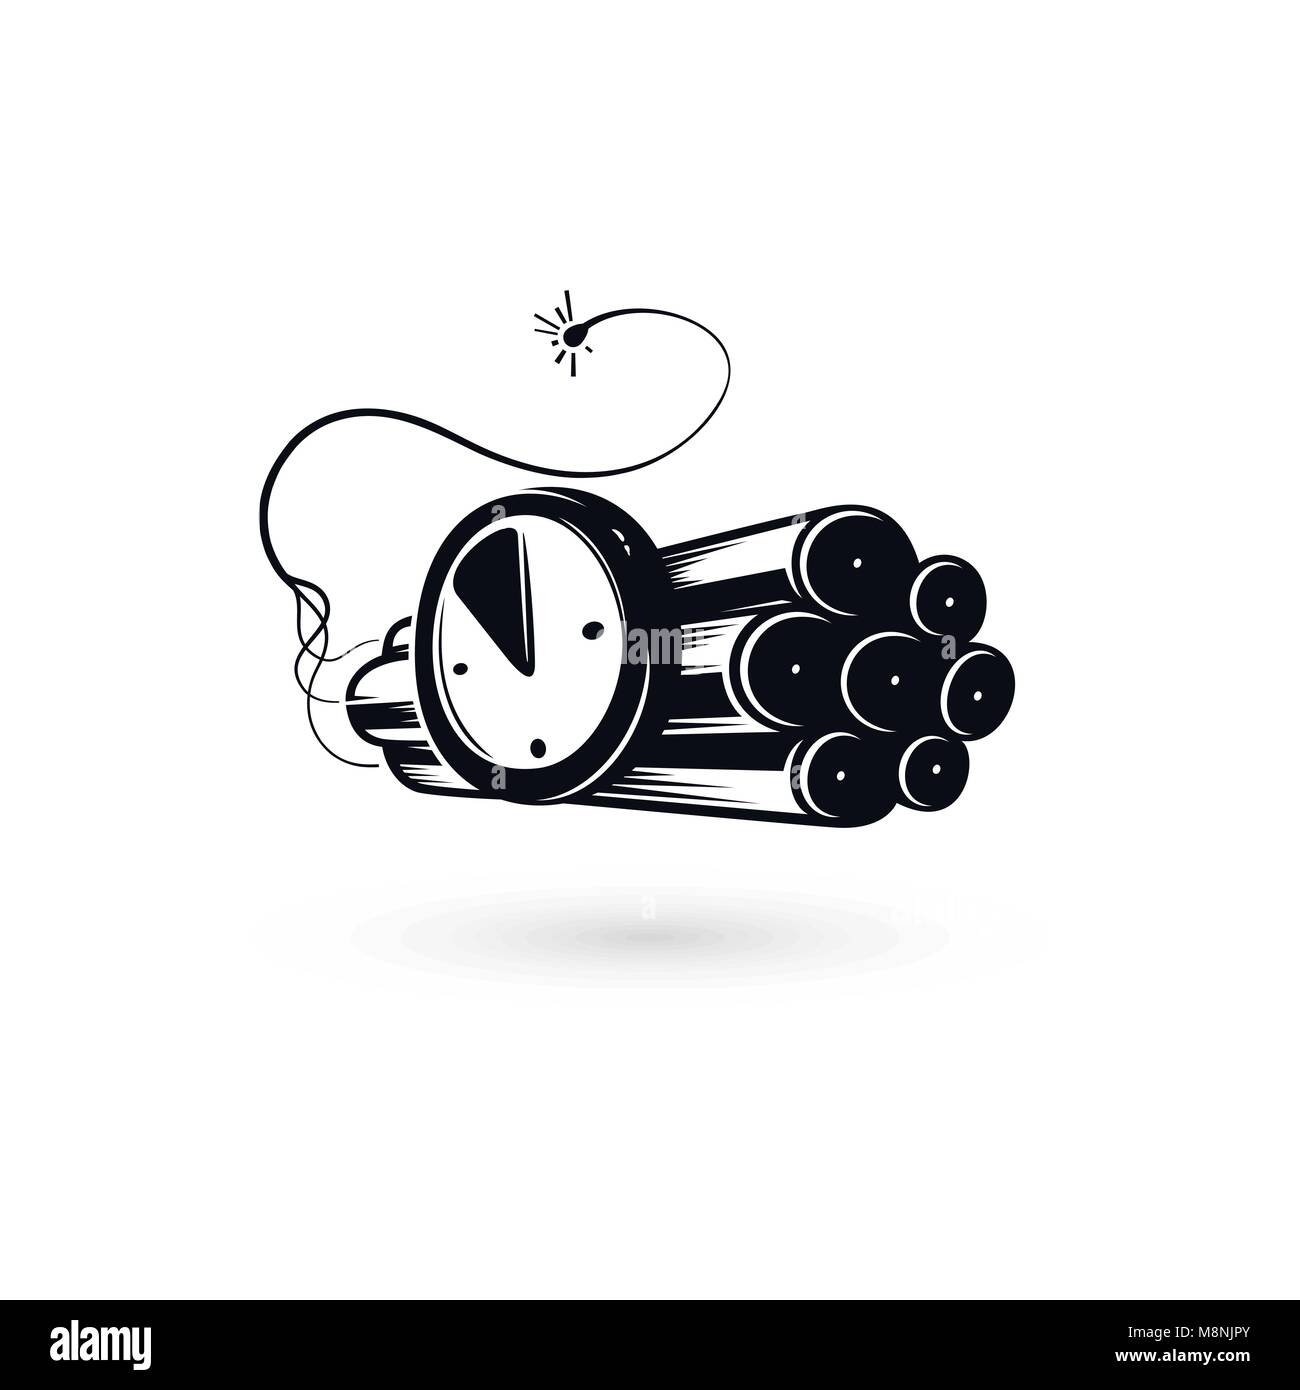 Deadline concept logo, countdown vector emblem Stock Vector